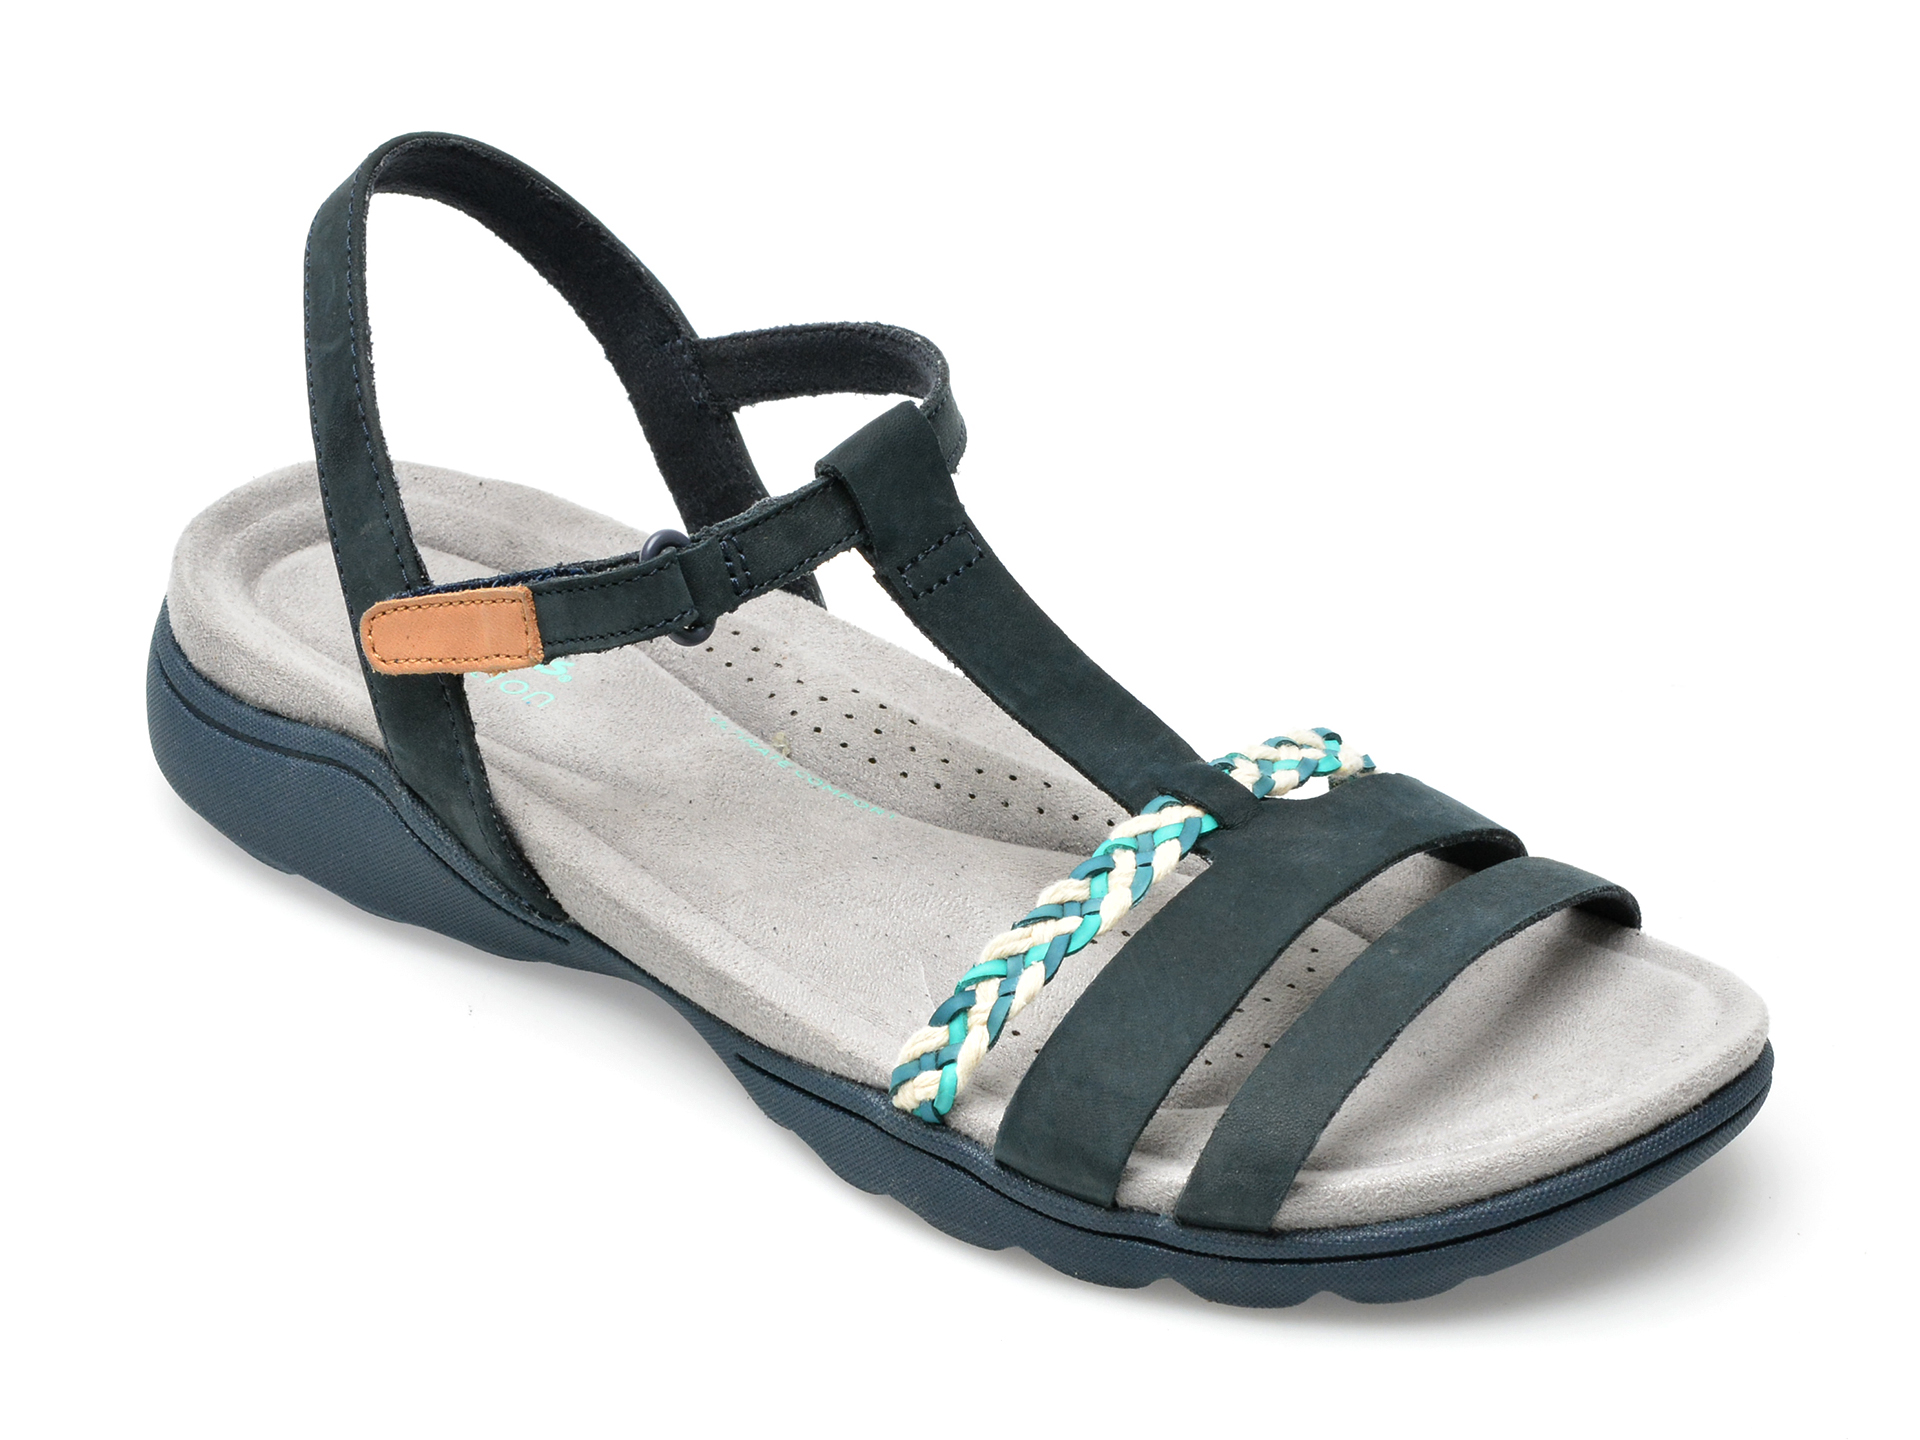 Sandale CLARKS bleumarin, AMANDA TEALITE 0912, din nabuc